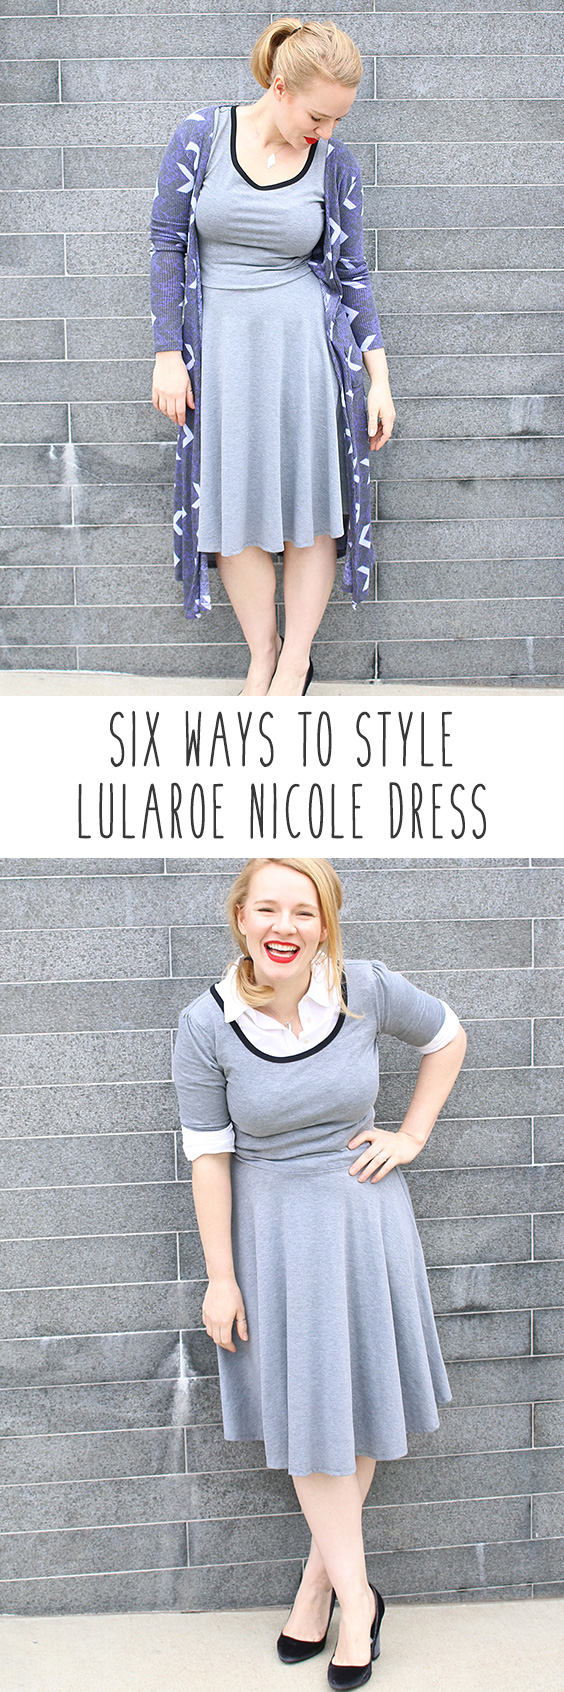 LuLaRoe Nicole Dress Styling